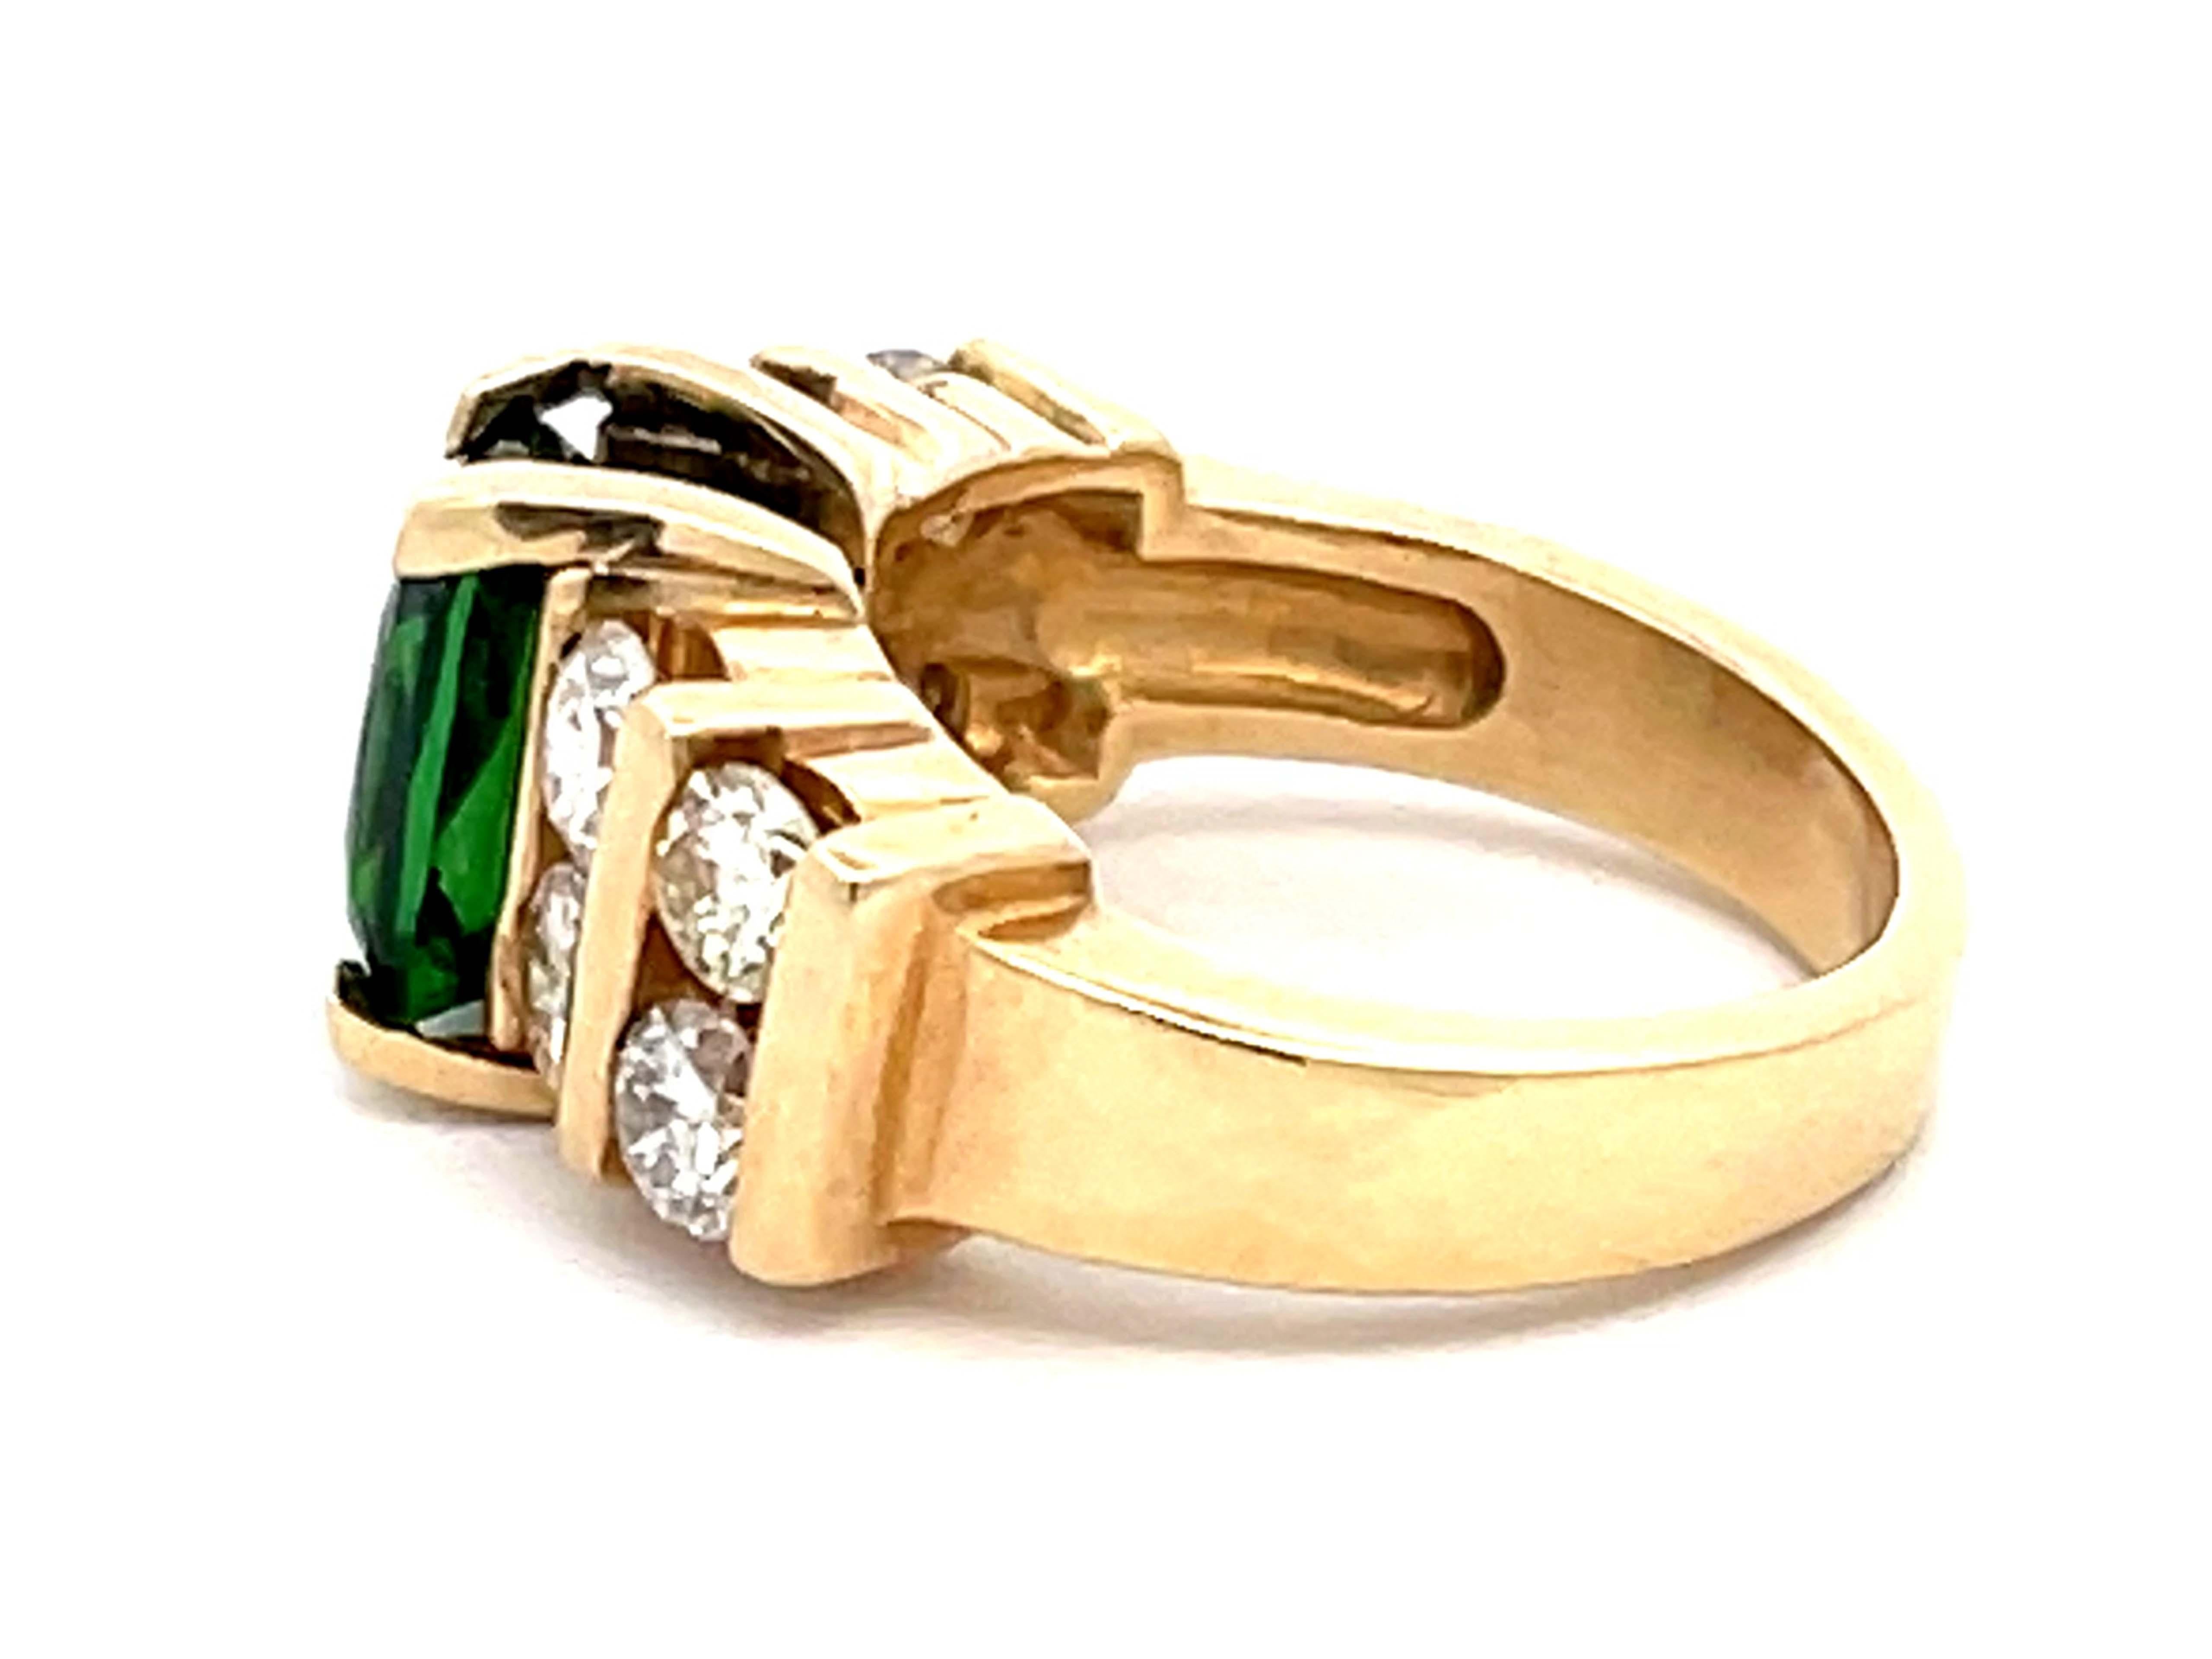 GIA Green Tsavorite Garnet and Diamond Ring in 14k Yellow Gold For Sale 1